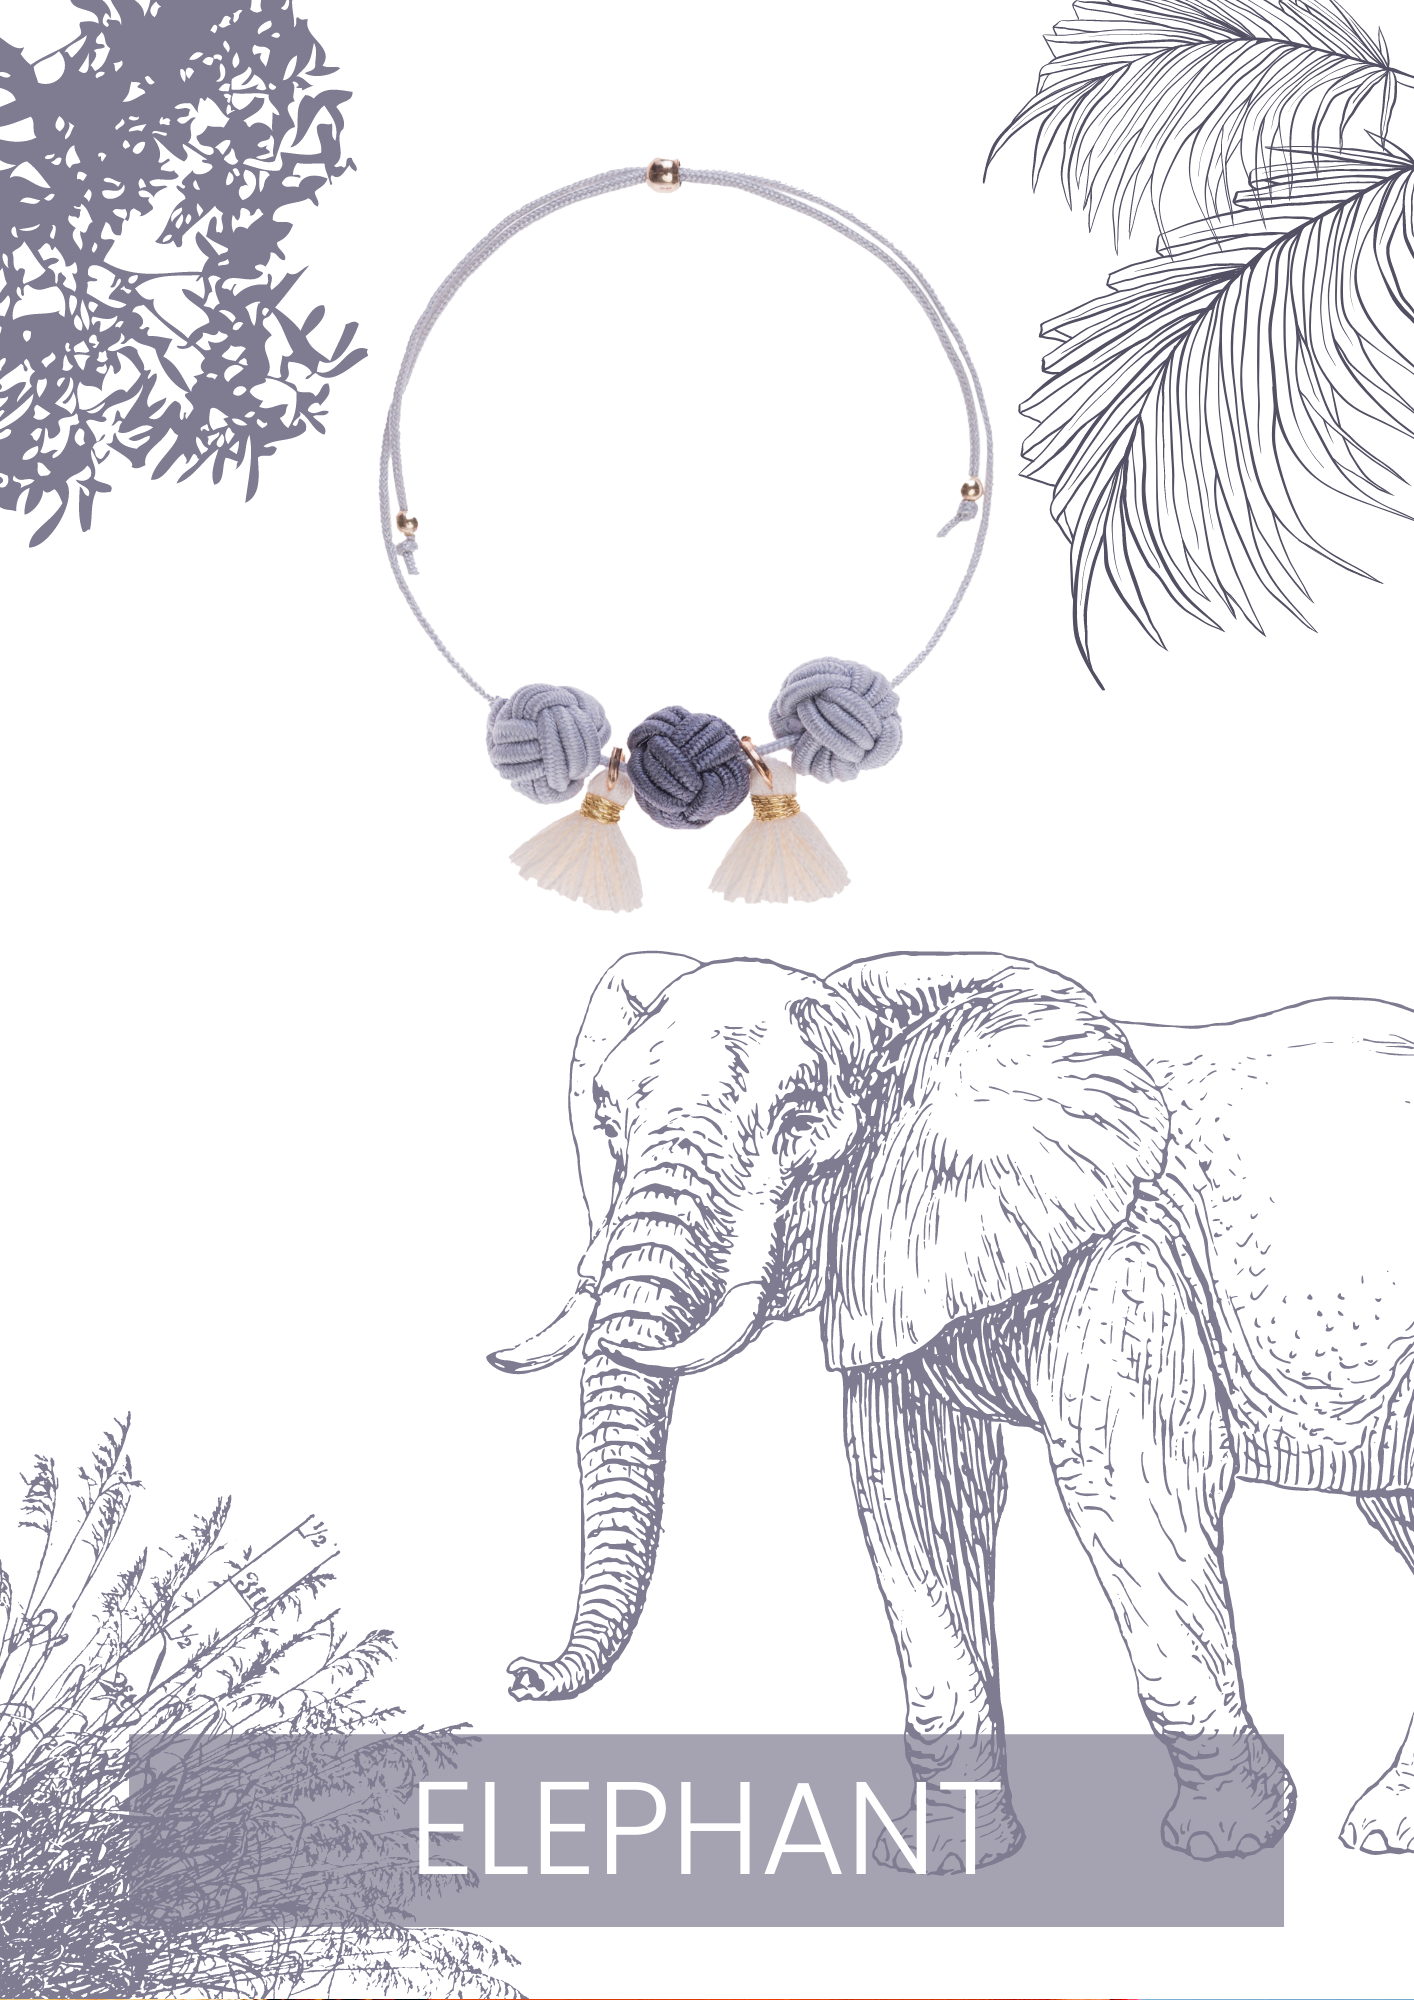 ELEPHANT Boho Bracelet